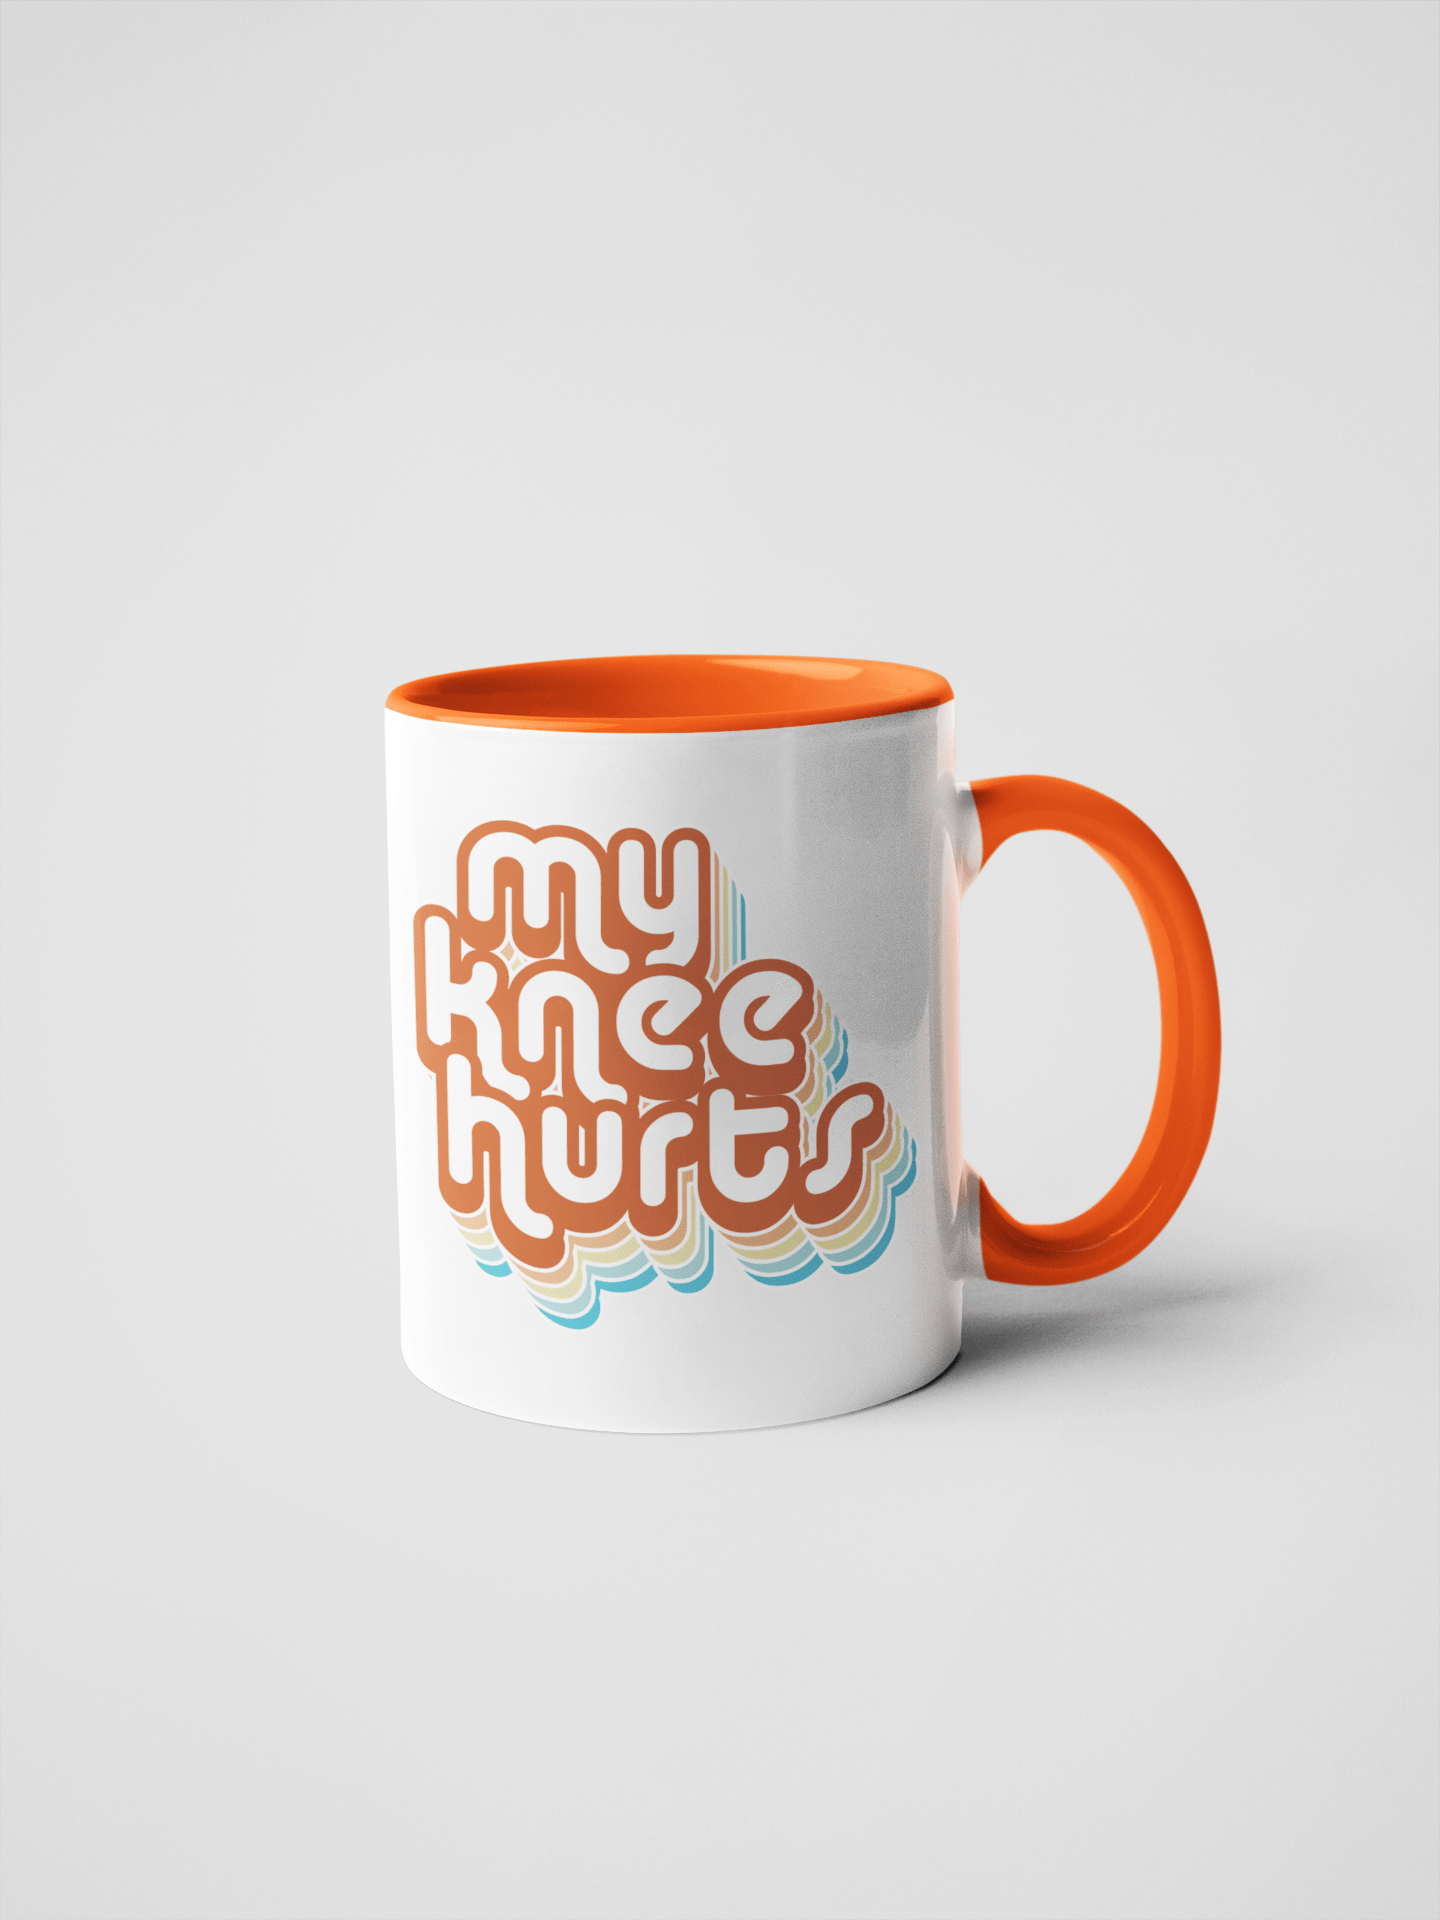 My Knee Hurts Ceramic Coffee Mug: 15 oz. / White/Orange